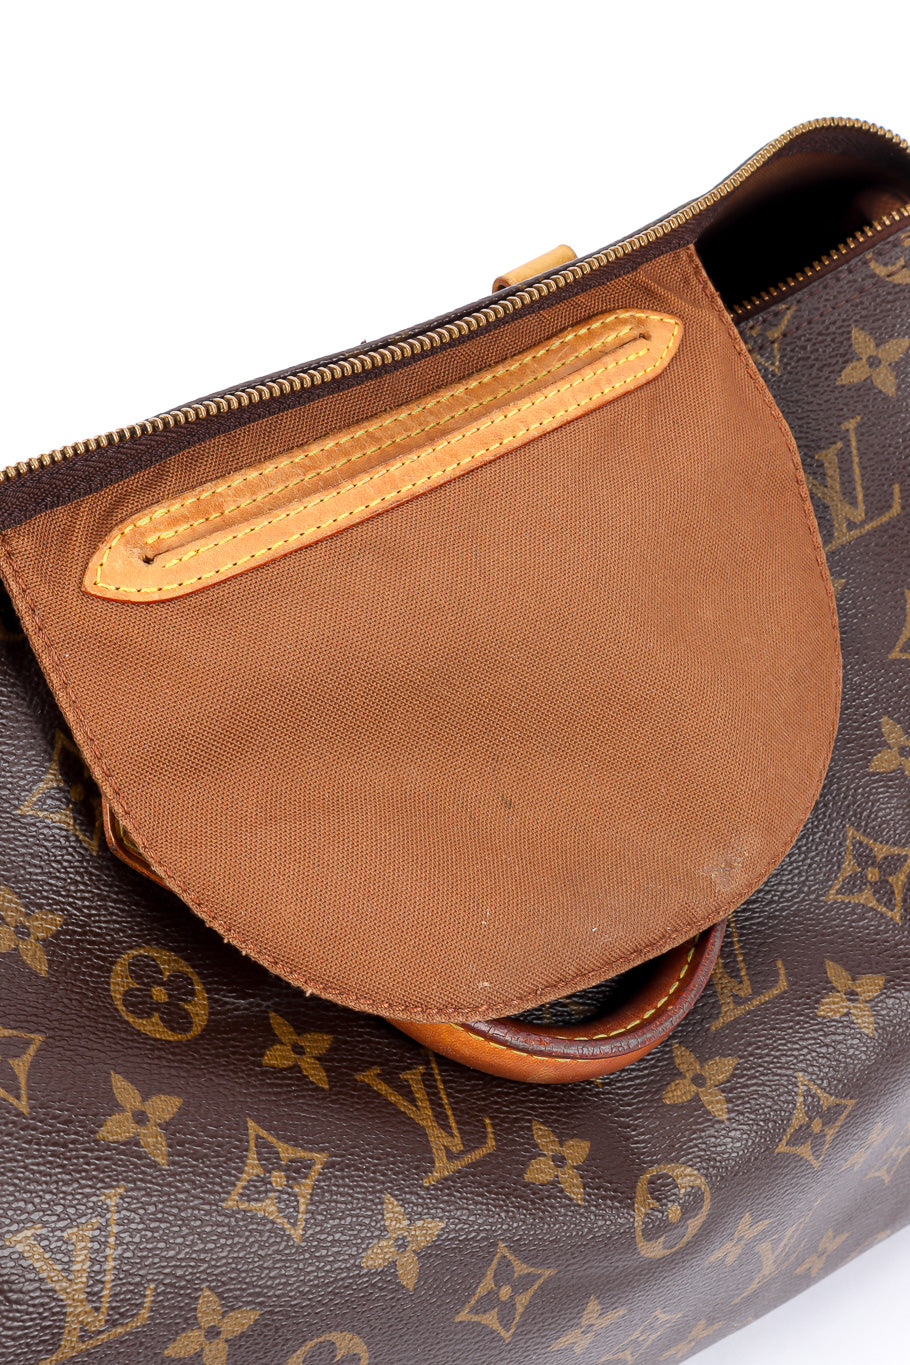 Vintage Louis Vuitton Classic Monogram Speedy 35 Bag inner slip pocket with marks closeup @Recessla